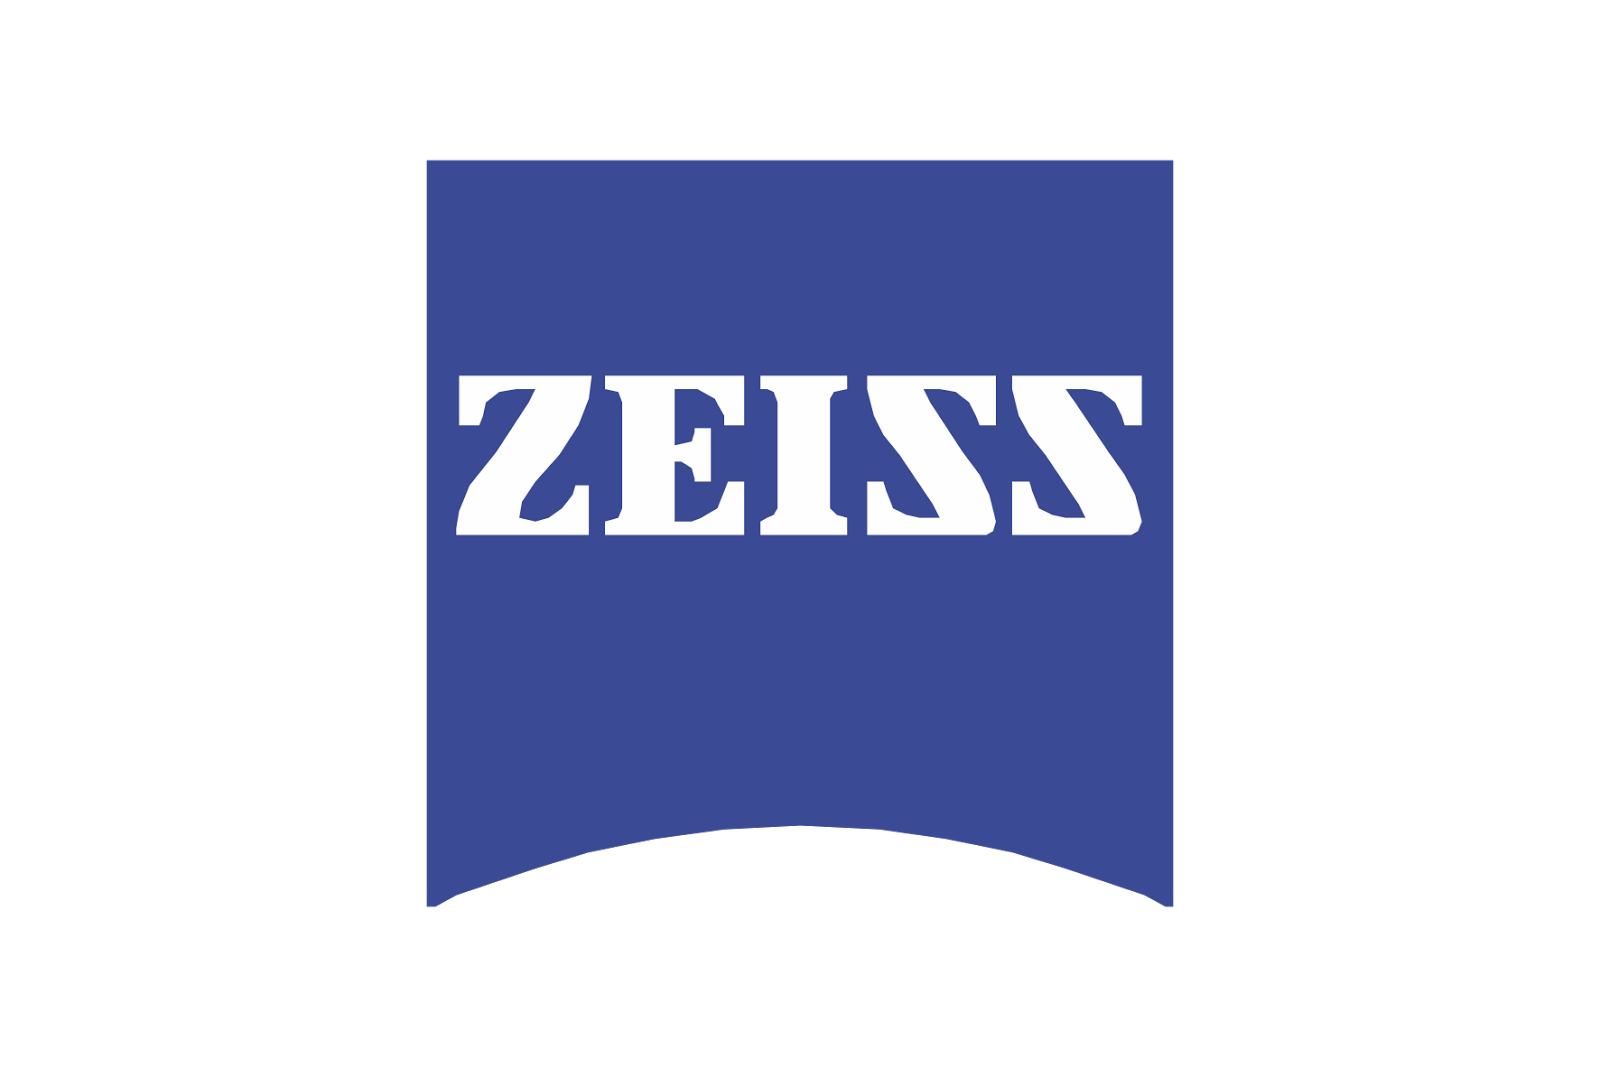 Carl Zeiss logo. Some logos a